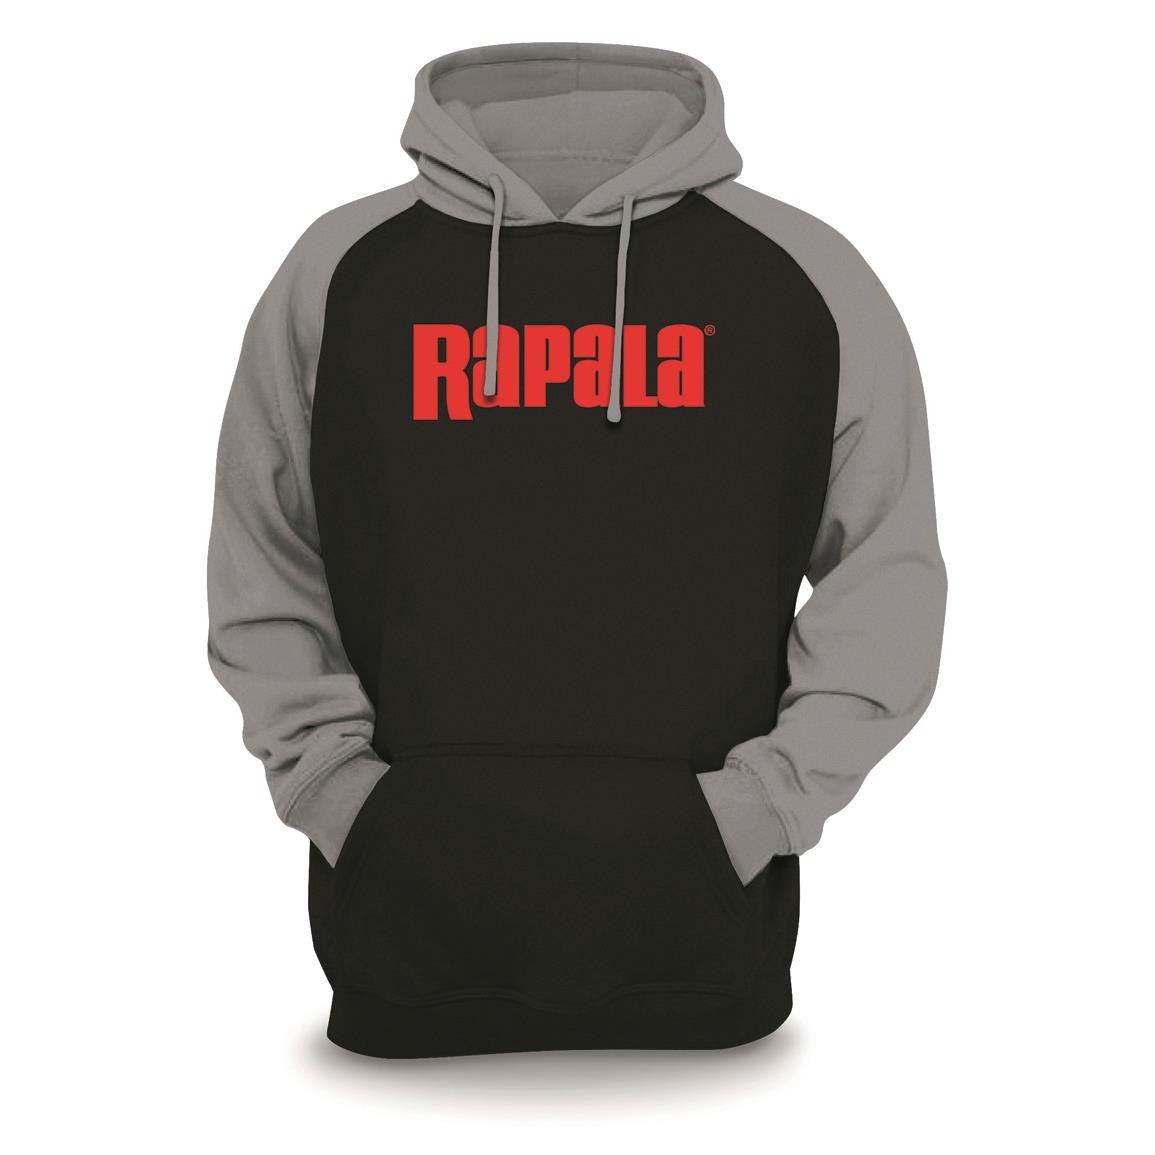 Rapala Hooded Sweatshirt, Black Gray